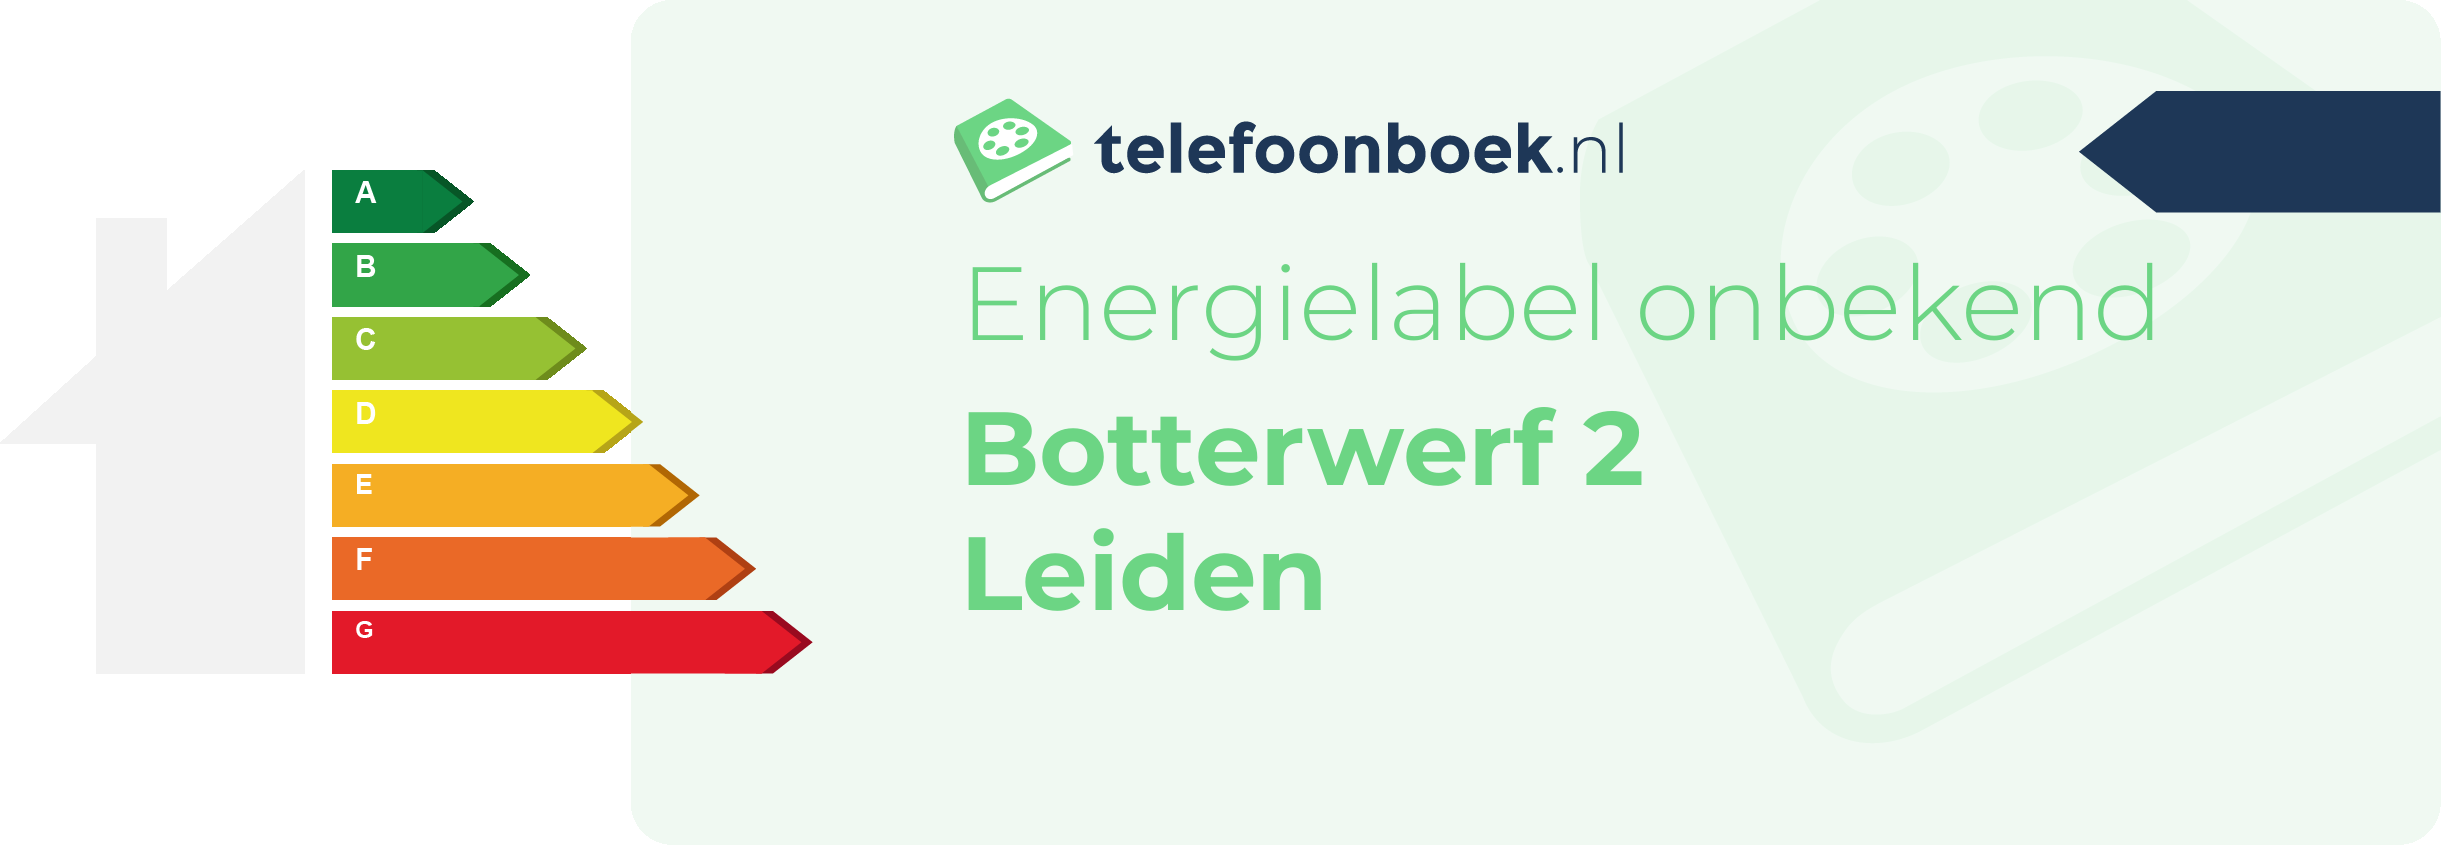 Energielabel Botterwerf 2 Leiden